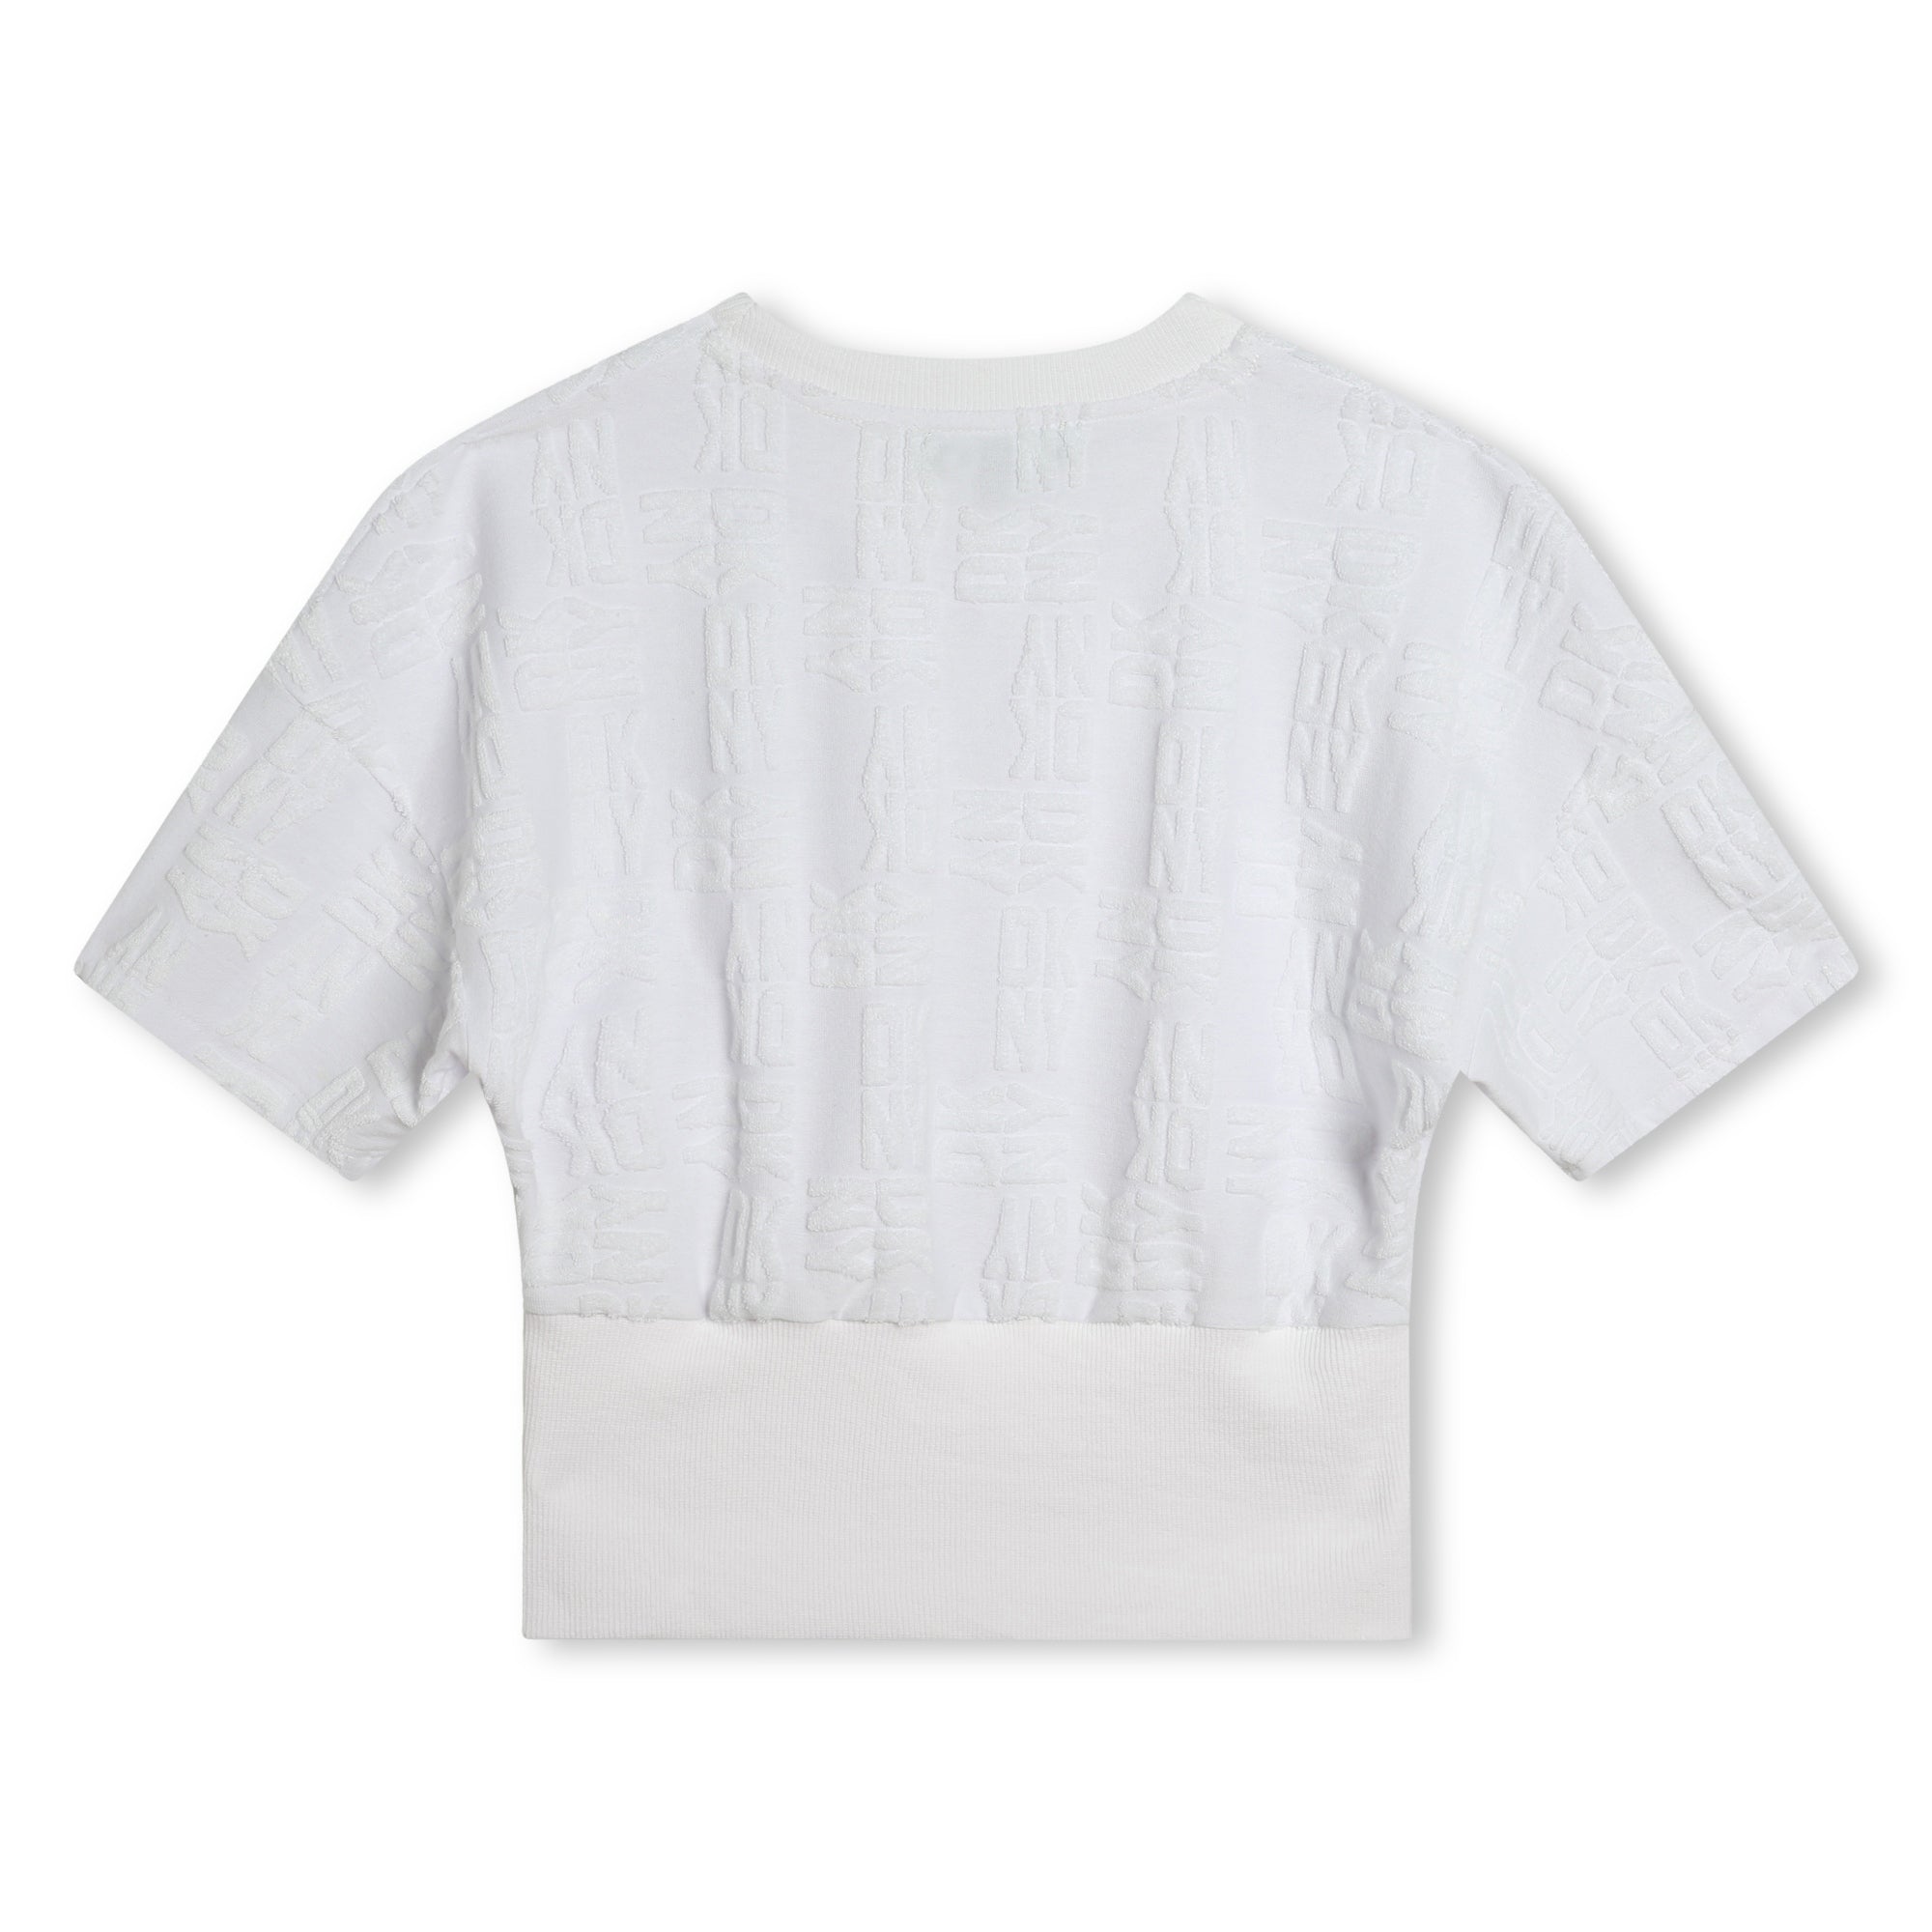 DKNY White Tone on Tone Logo Tee Shirt